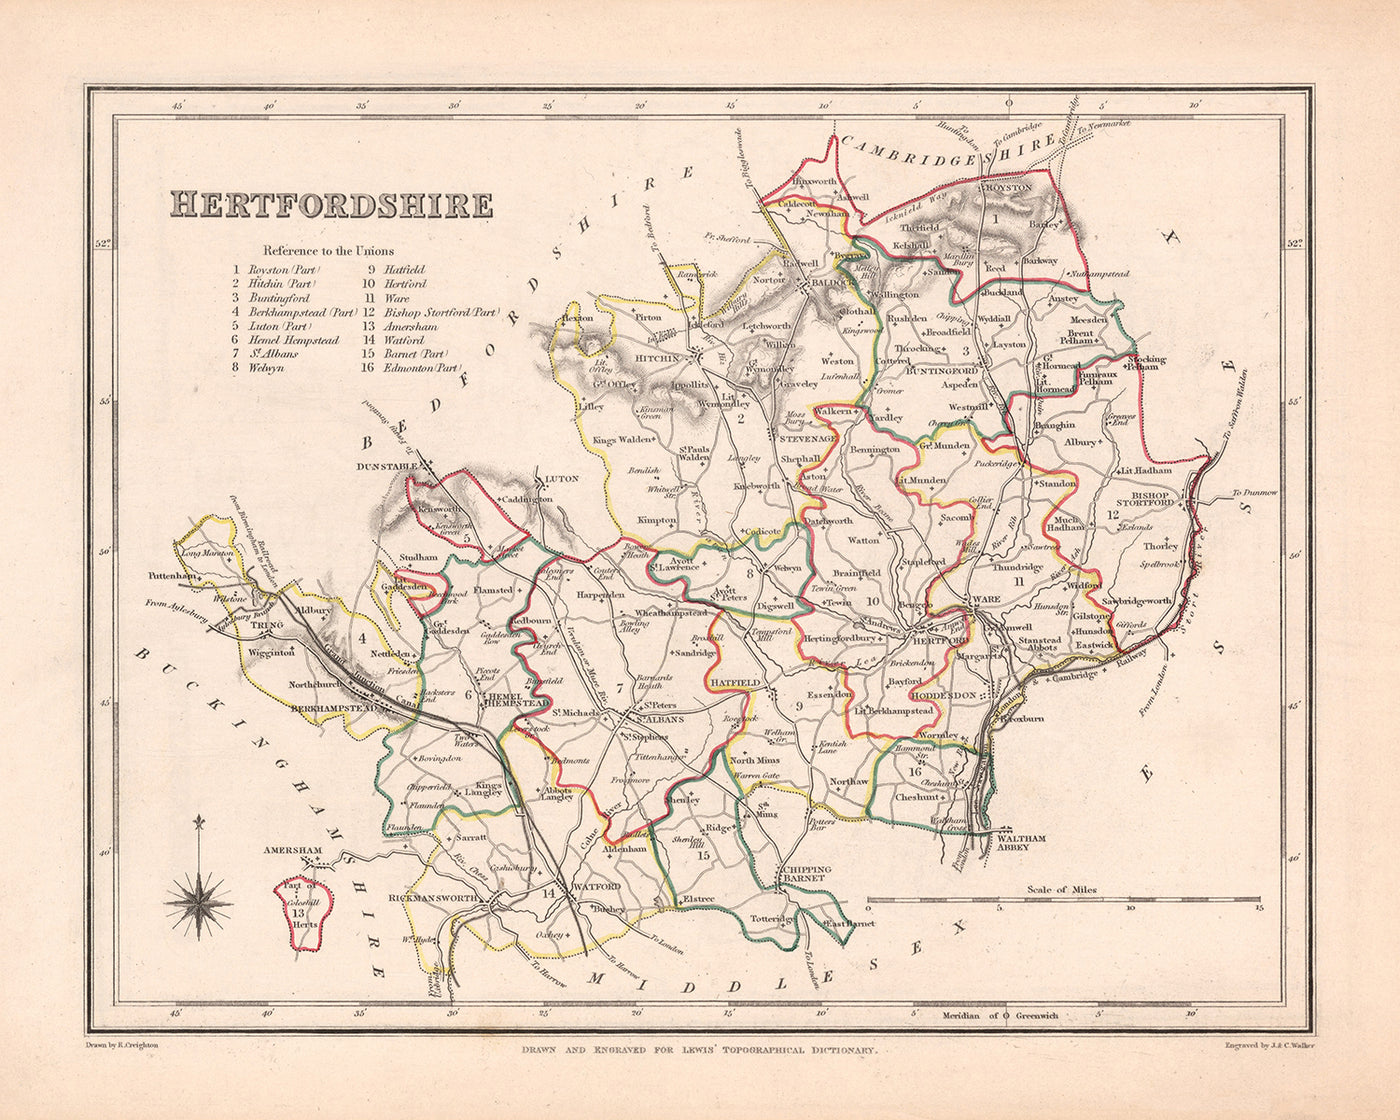 Old Map of Hertfordshire by Samuel Lewis, 1844: St Albans, Watford, Hemel Hempstead, Stevenage, Hitchin